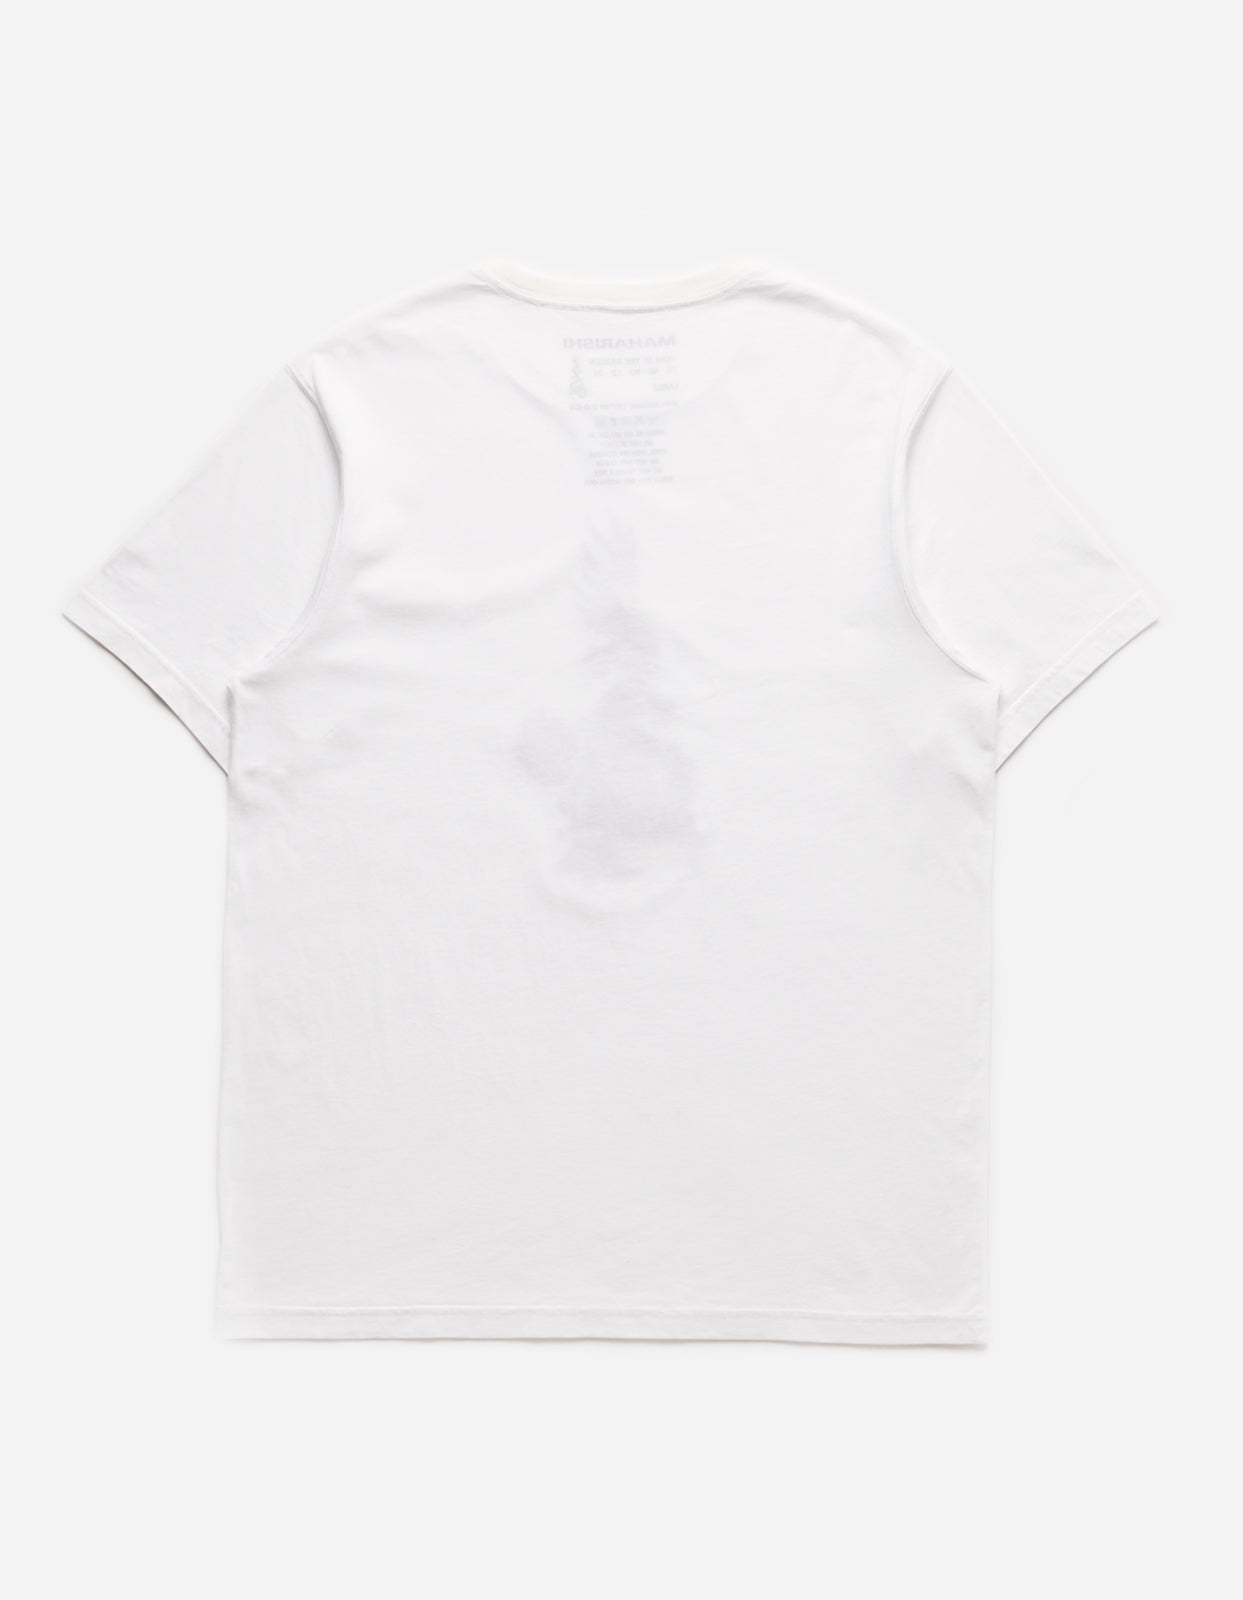 5125 Original Dragon T-Shirt White